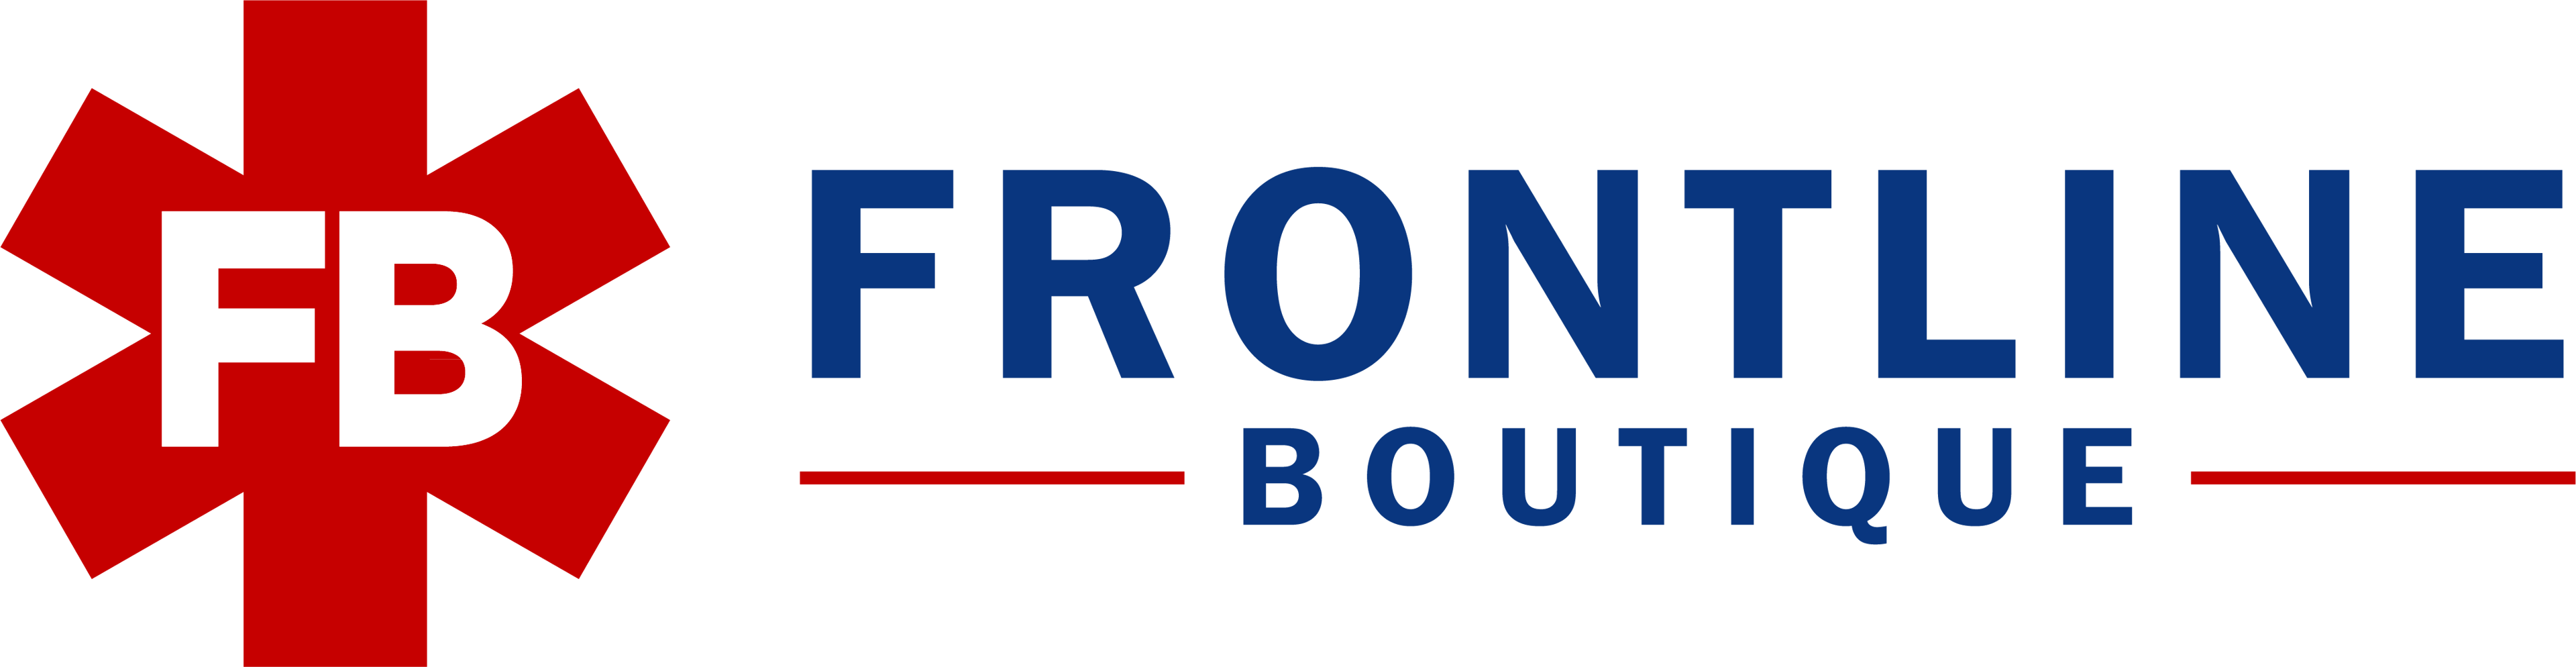 Frontline Boutique logo